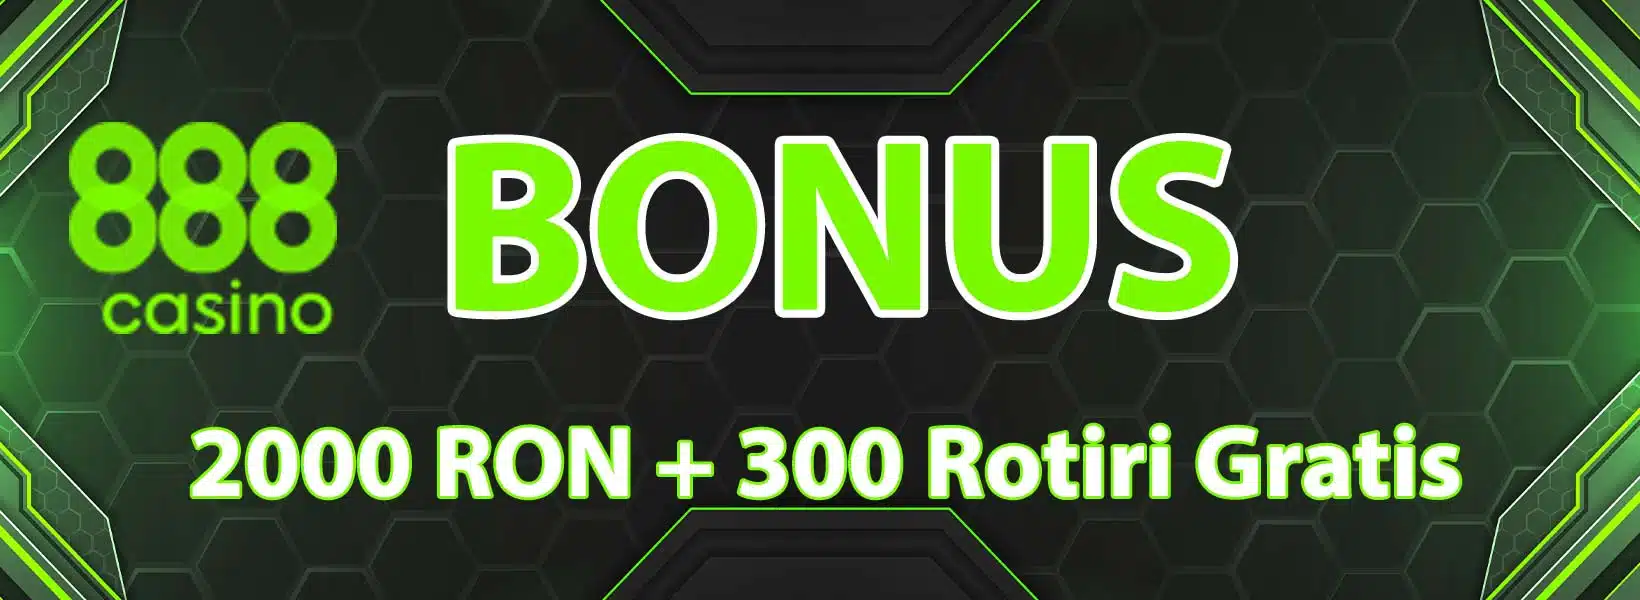 888 bonus de bun venit